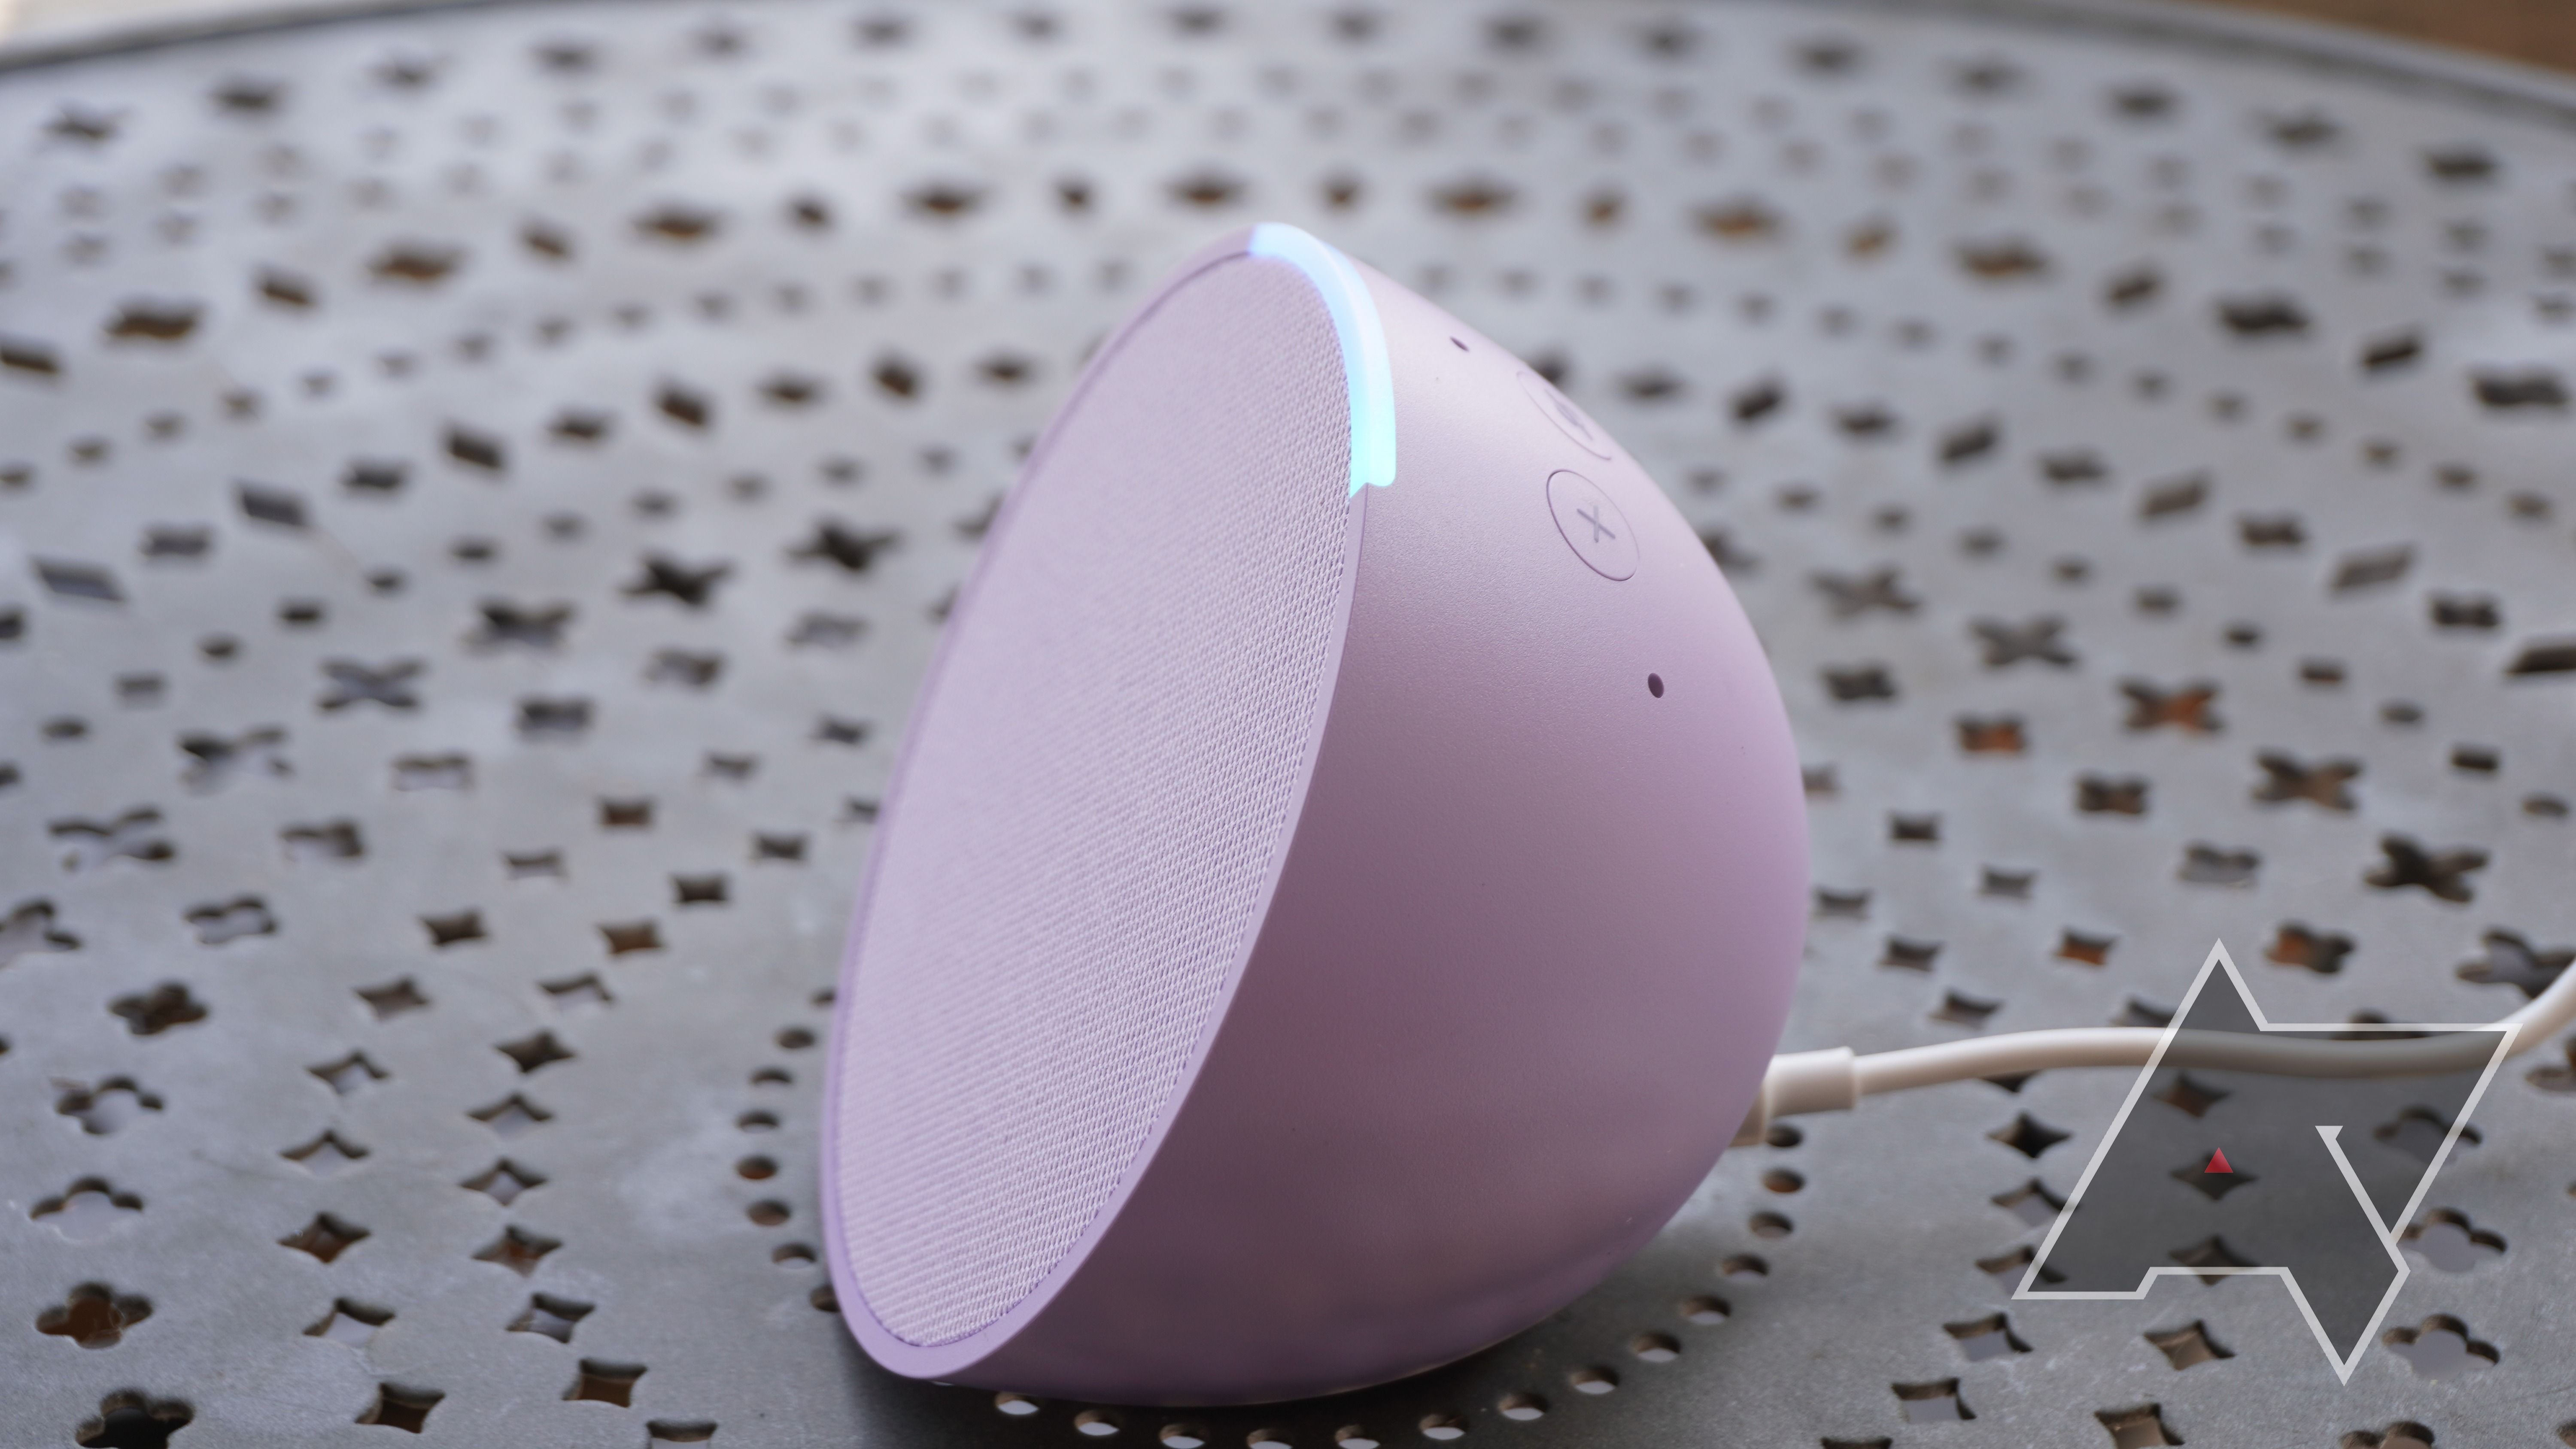 Echo Pop Smart Speaker with Alexa Voice Recognition & Control,  Glacier White